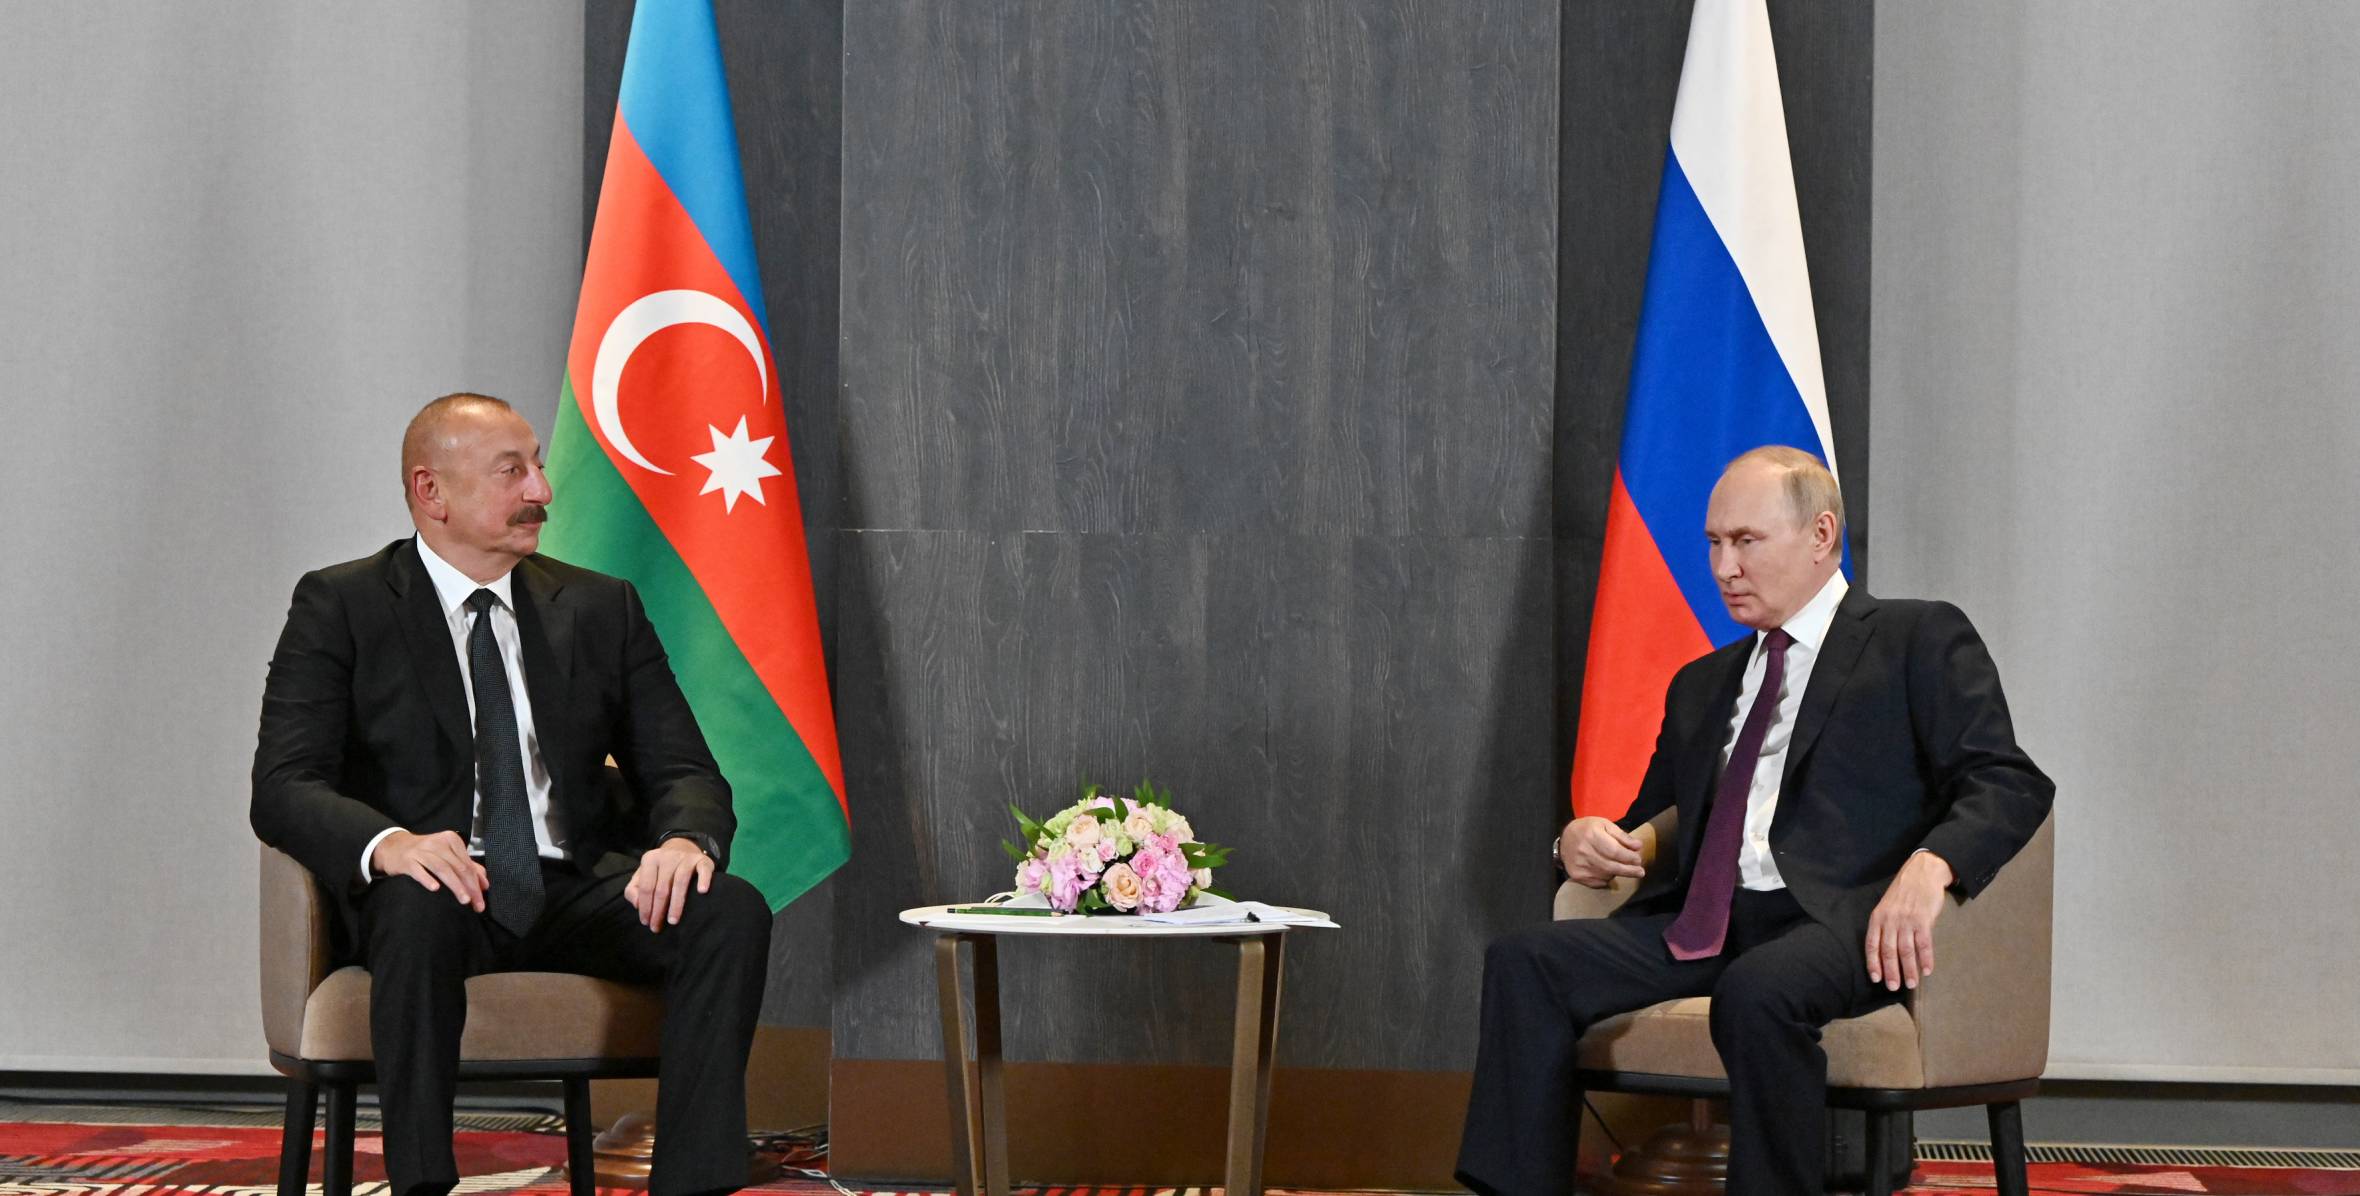 Ilham Aliyev met with President of Russia Vladimir Putin in Samarkand